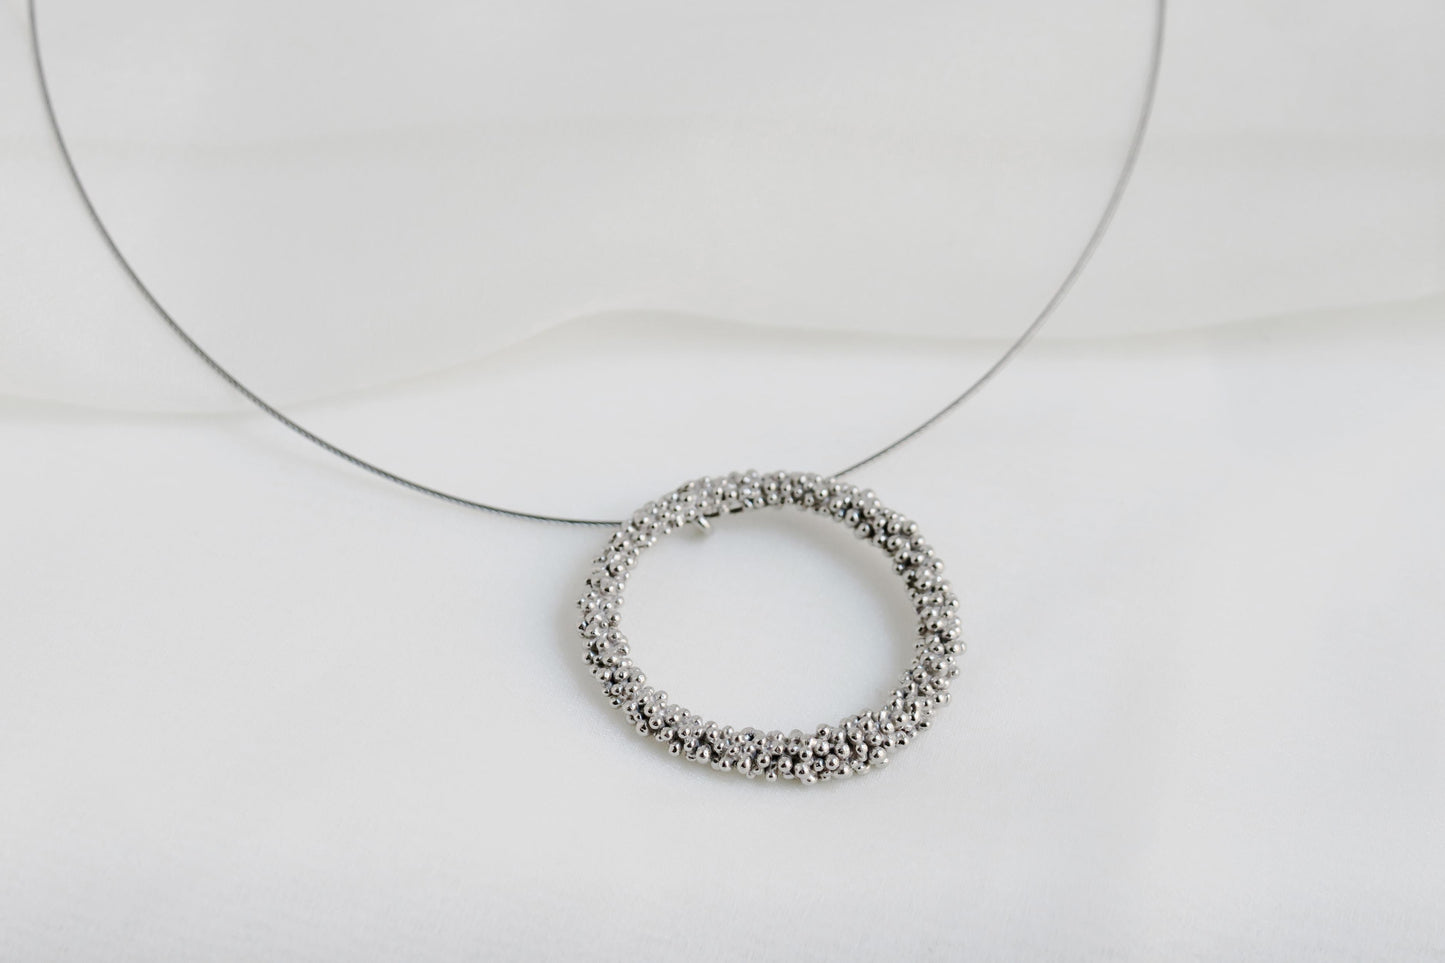 Stardust necklace by Carme Fàbregas